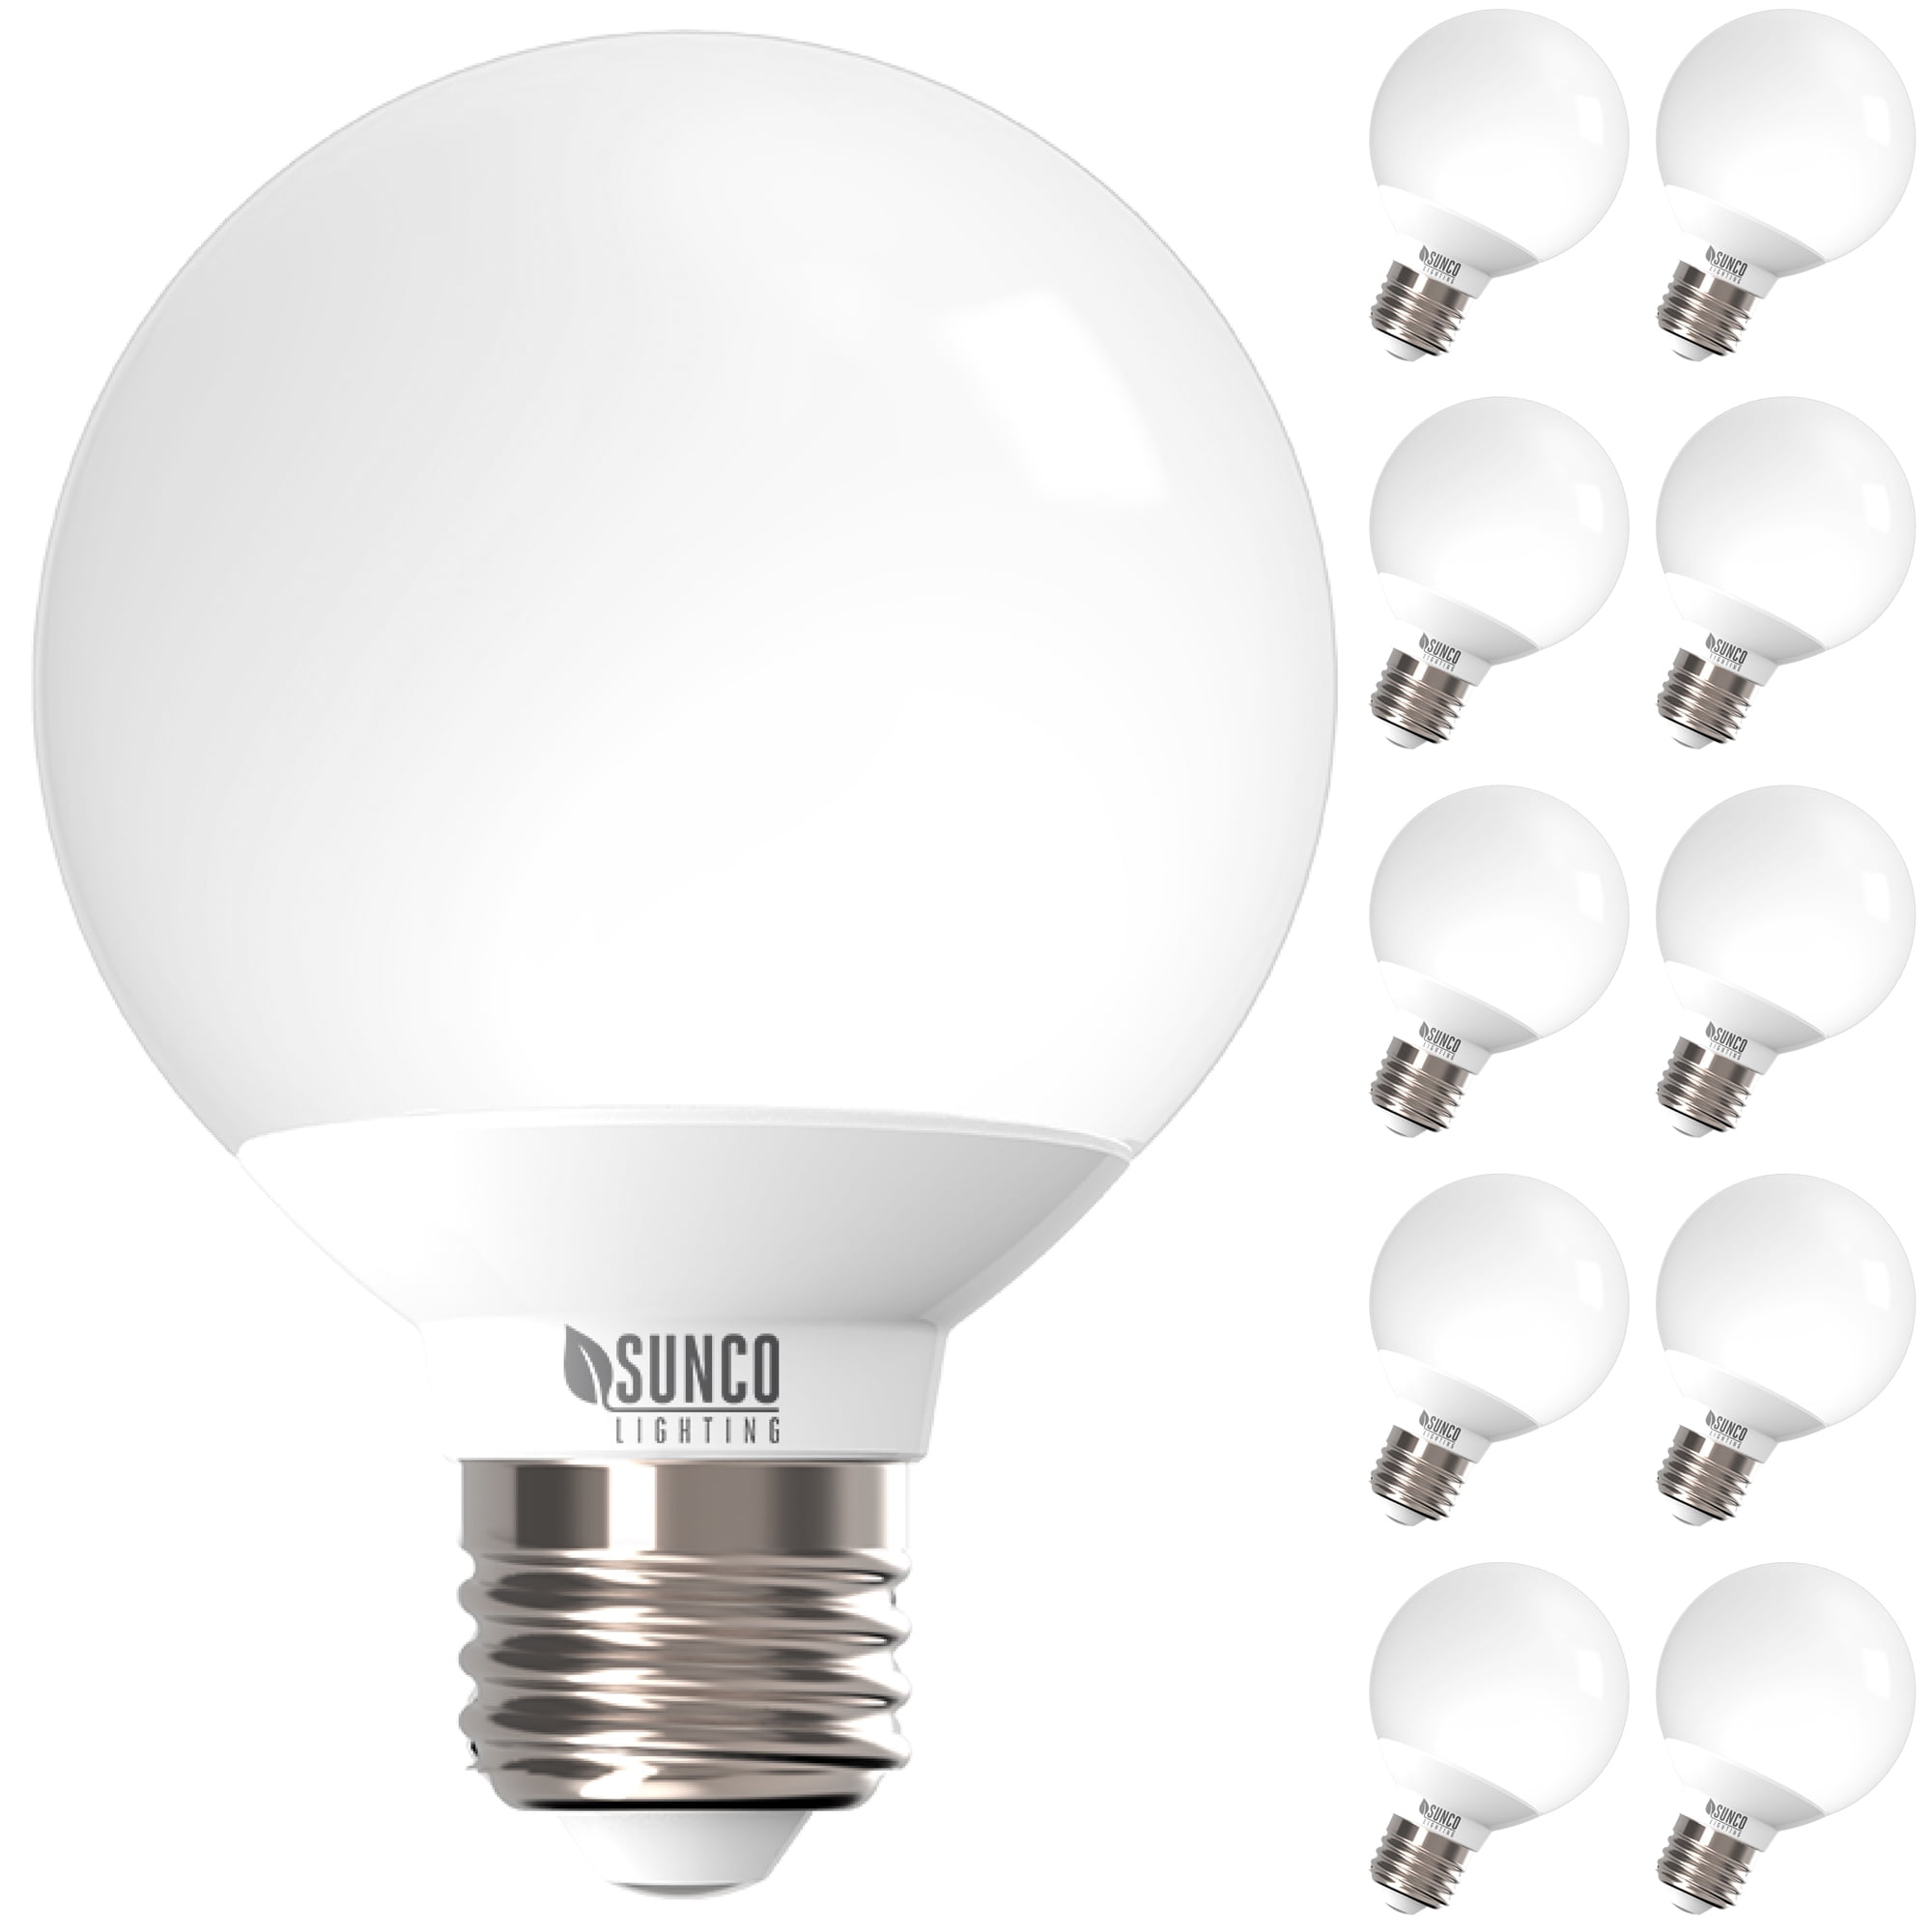 Sunco Lighting 10 Pack G25 Led Globe, What Are The Best Light Bulbs For A Vanity Mirror